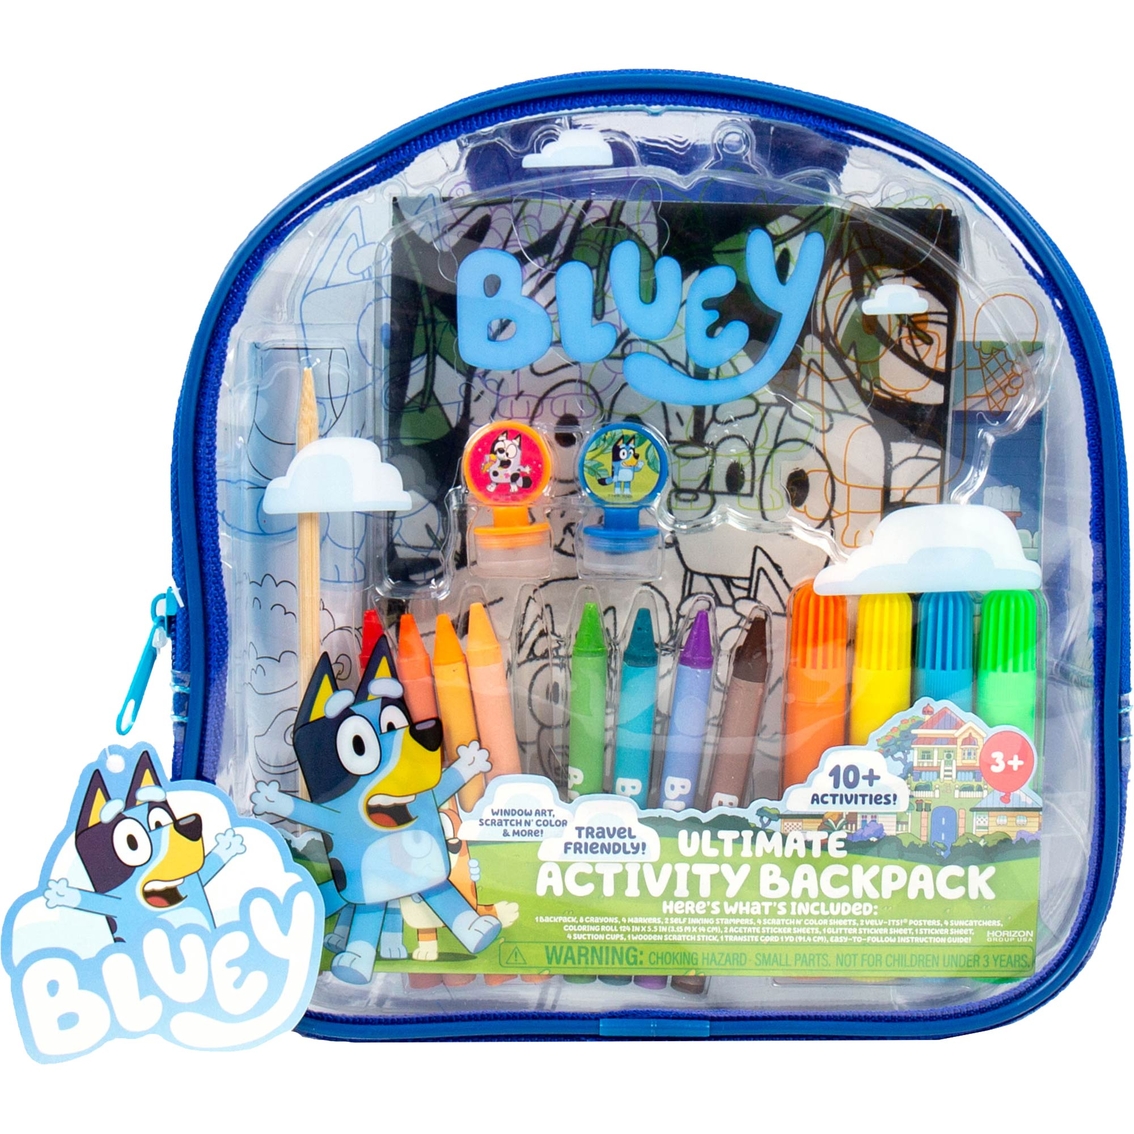 Bluey Window Art Craft Kit